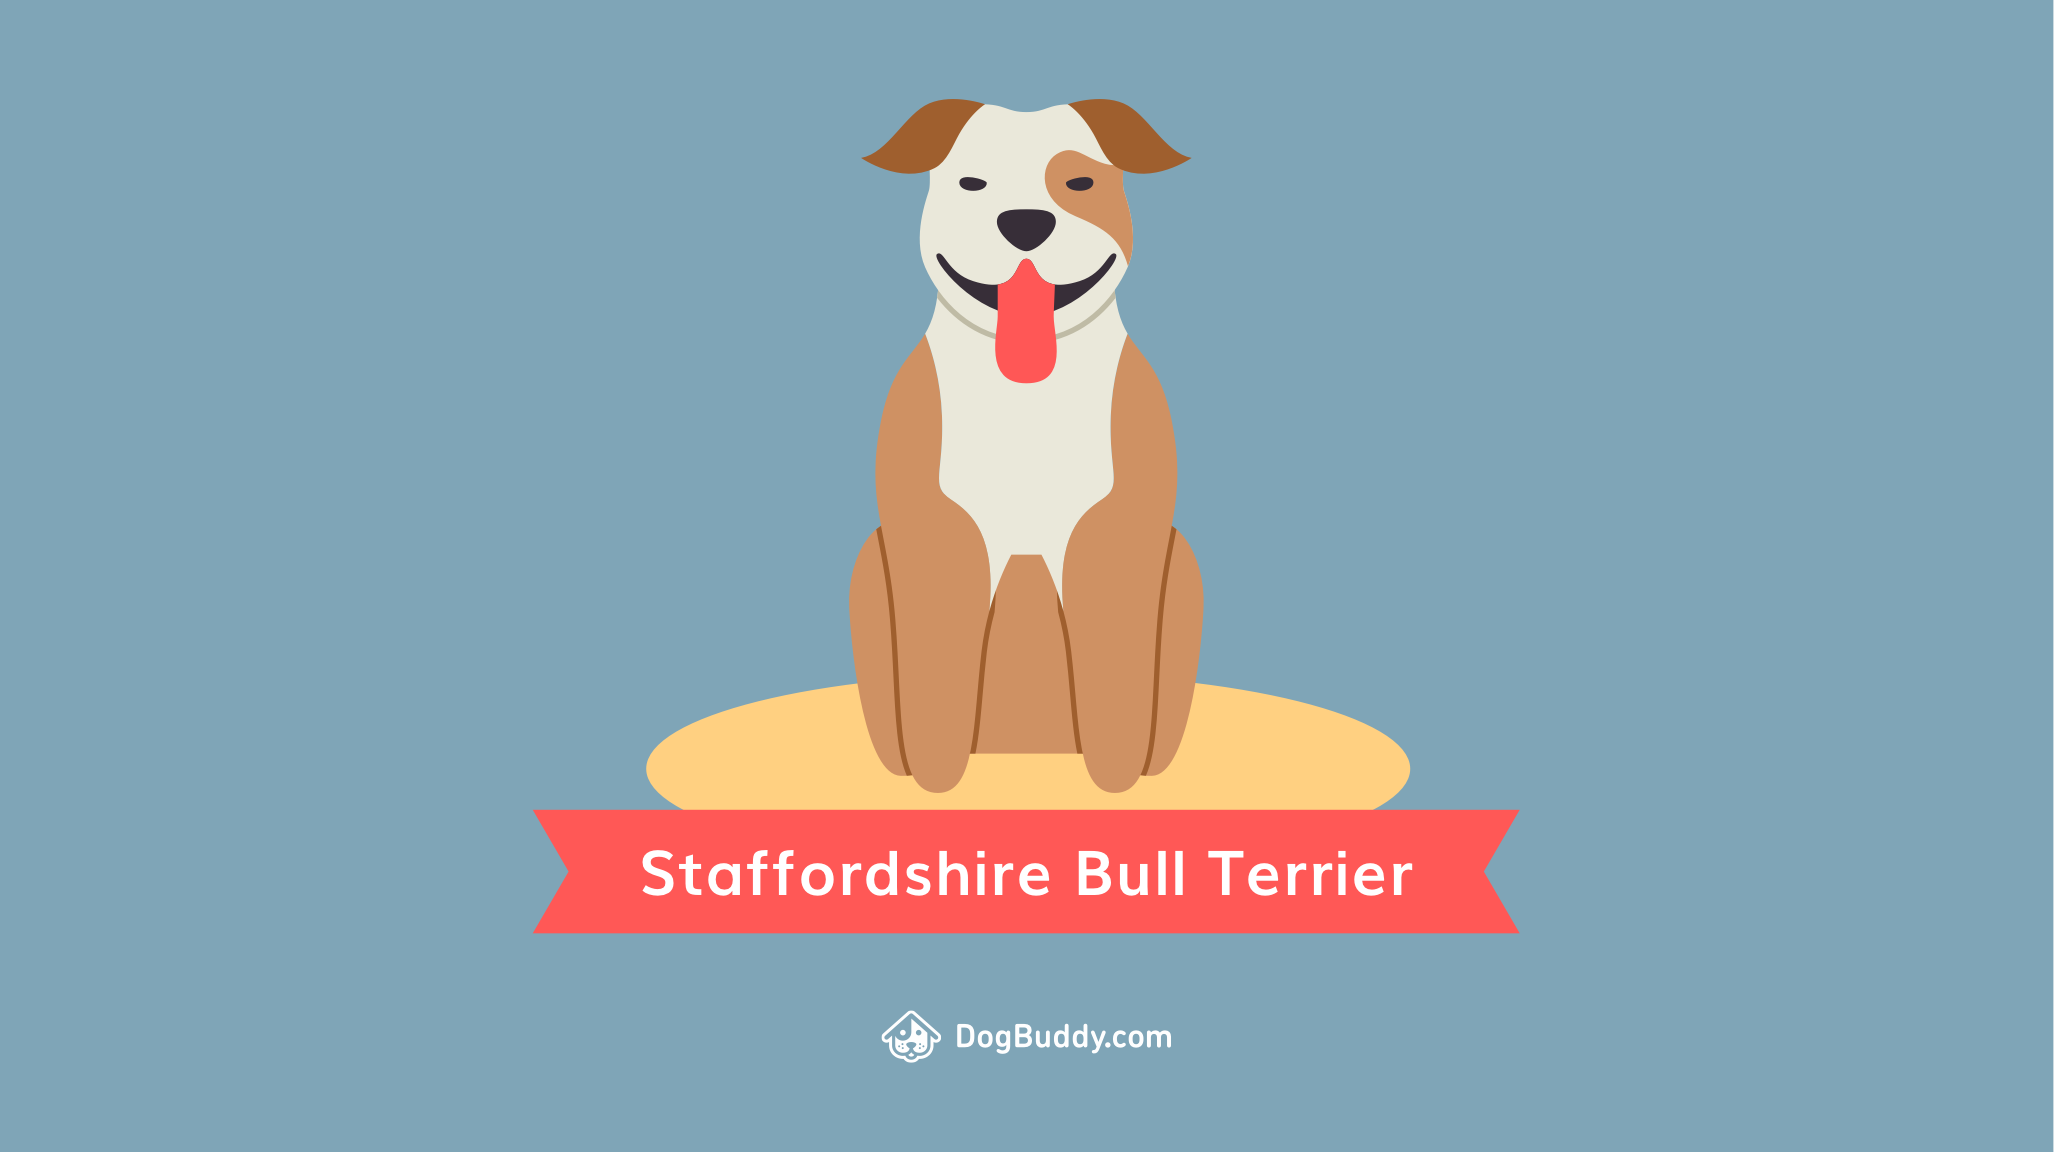 Guaufondo de pantalla: Staffordshire Bull Terrier - DogBuddy Blog